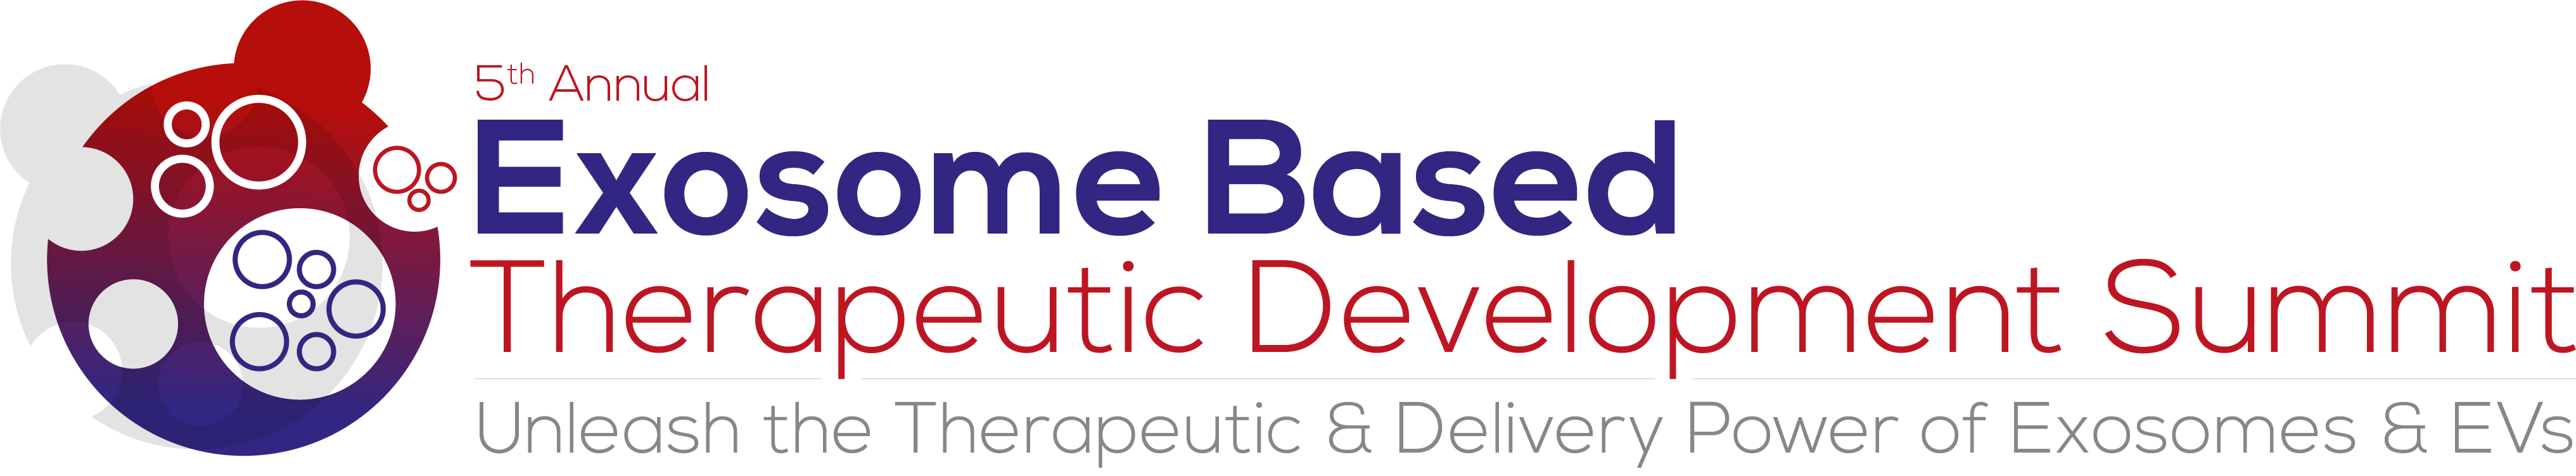 32726 5th Exosome Based Therapeutics Summit logo (1)